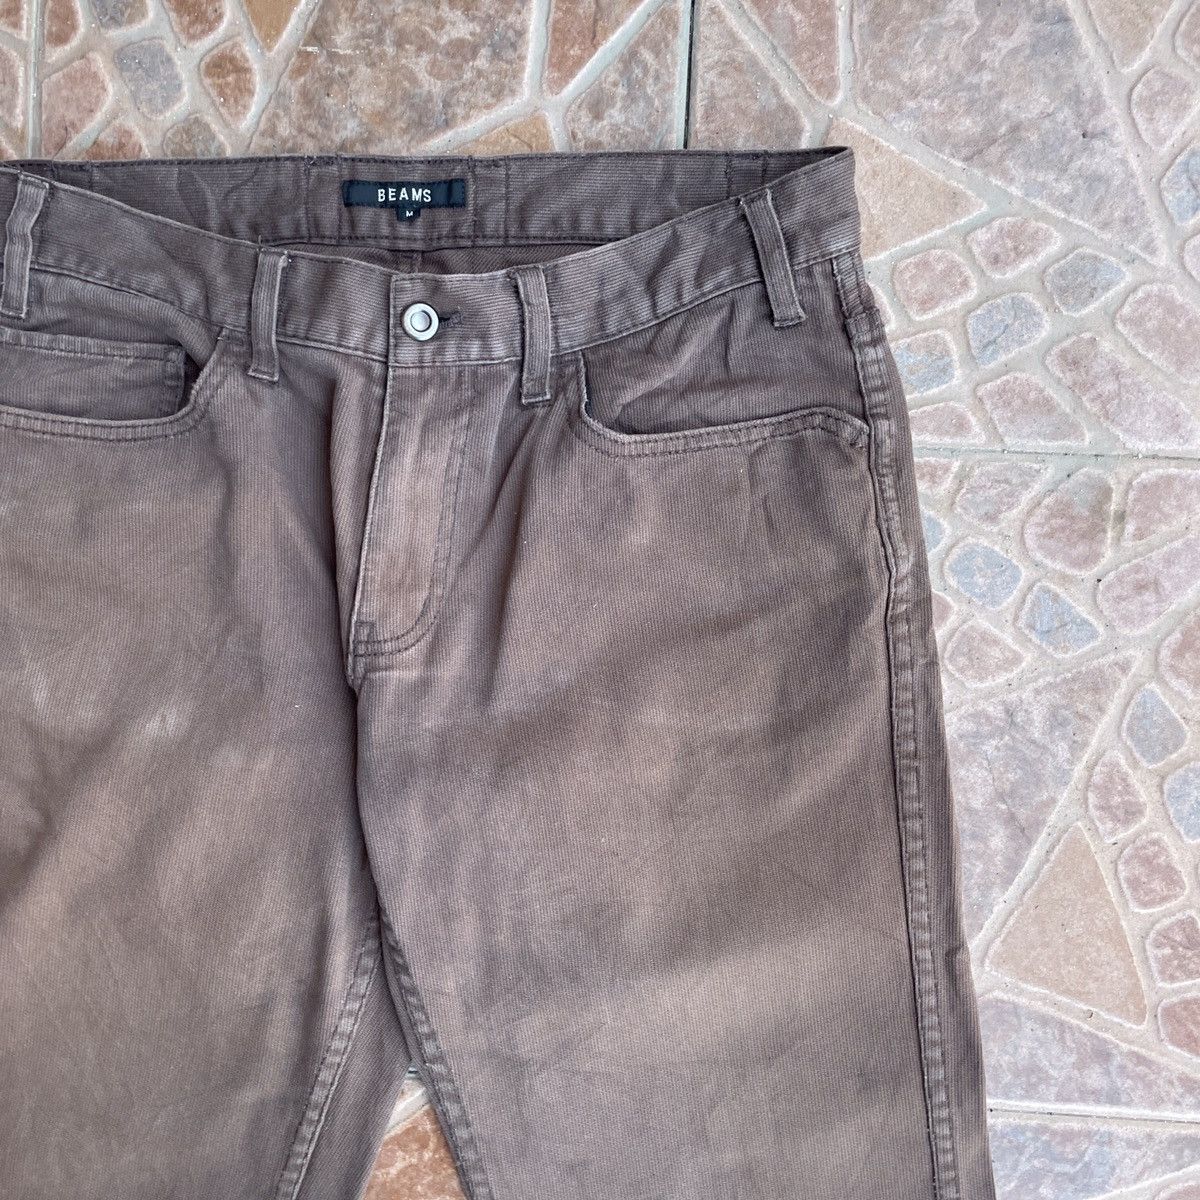 Beams Plus Vintage Beams Corduroy Distressed Casual Pants Size US 32 / EU 48 - 2 Preview